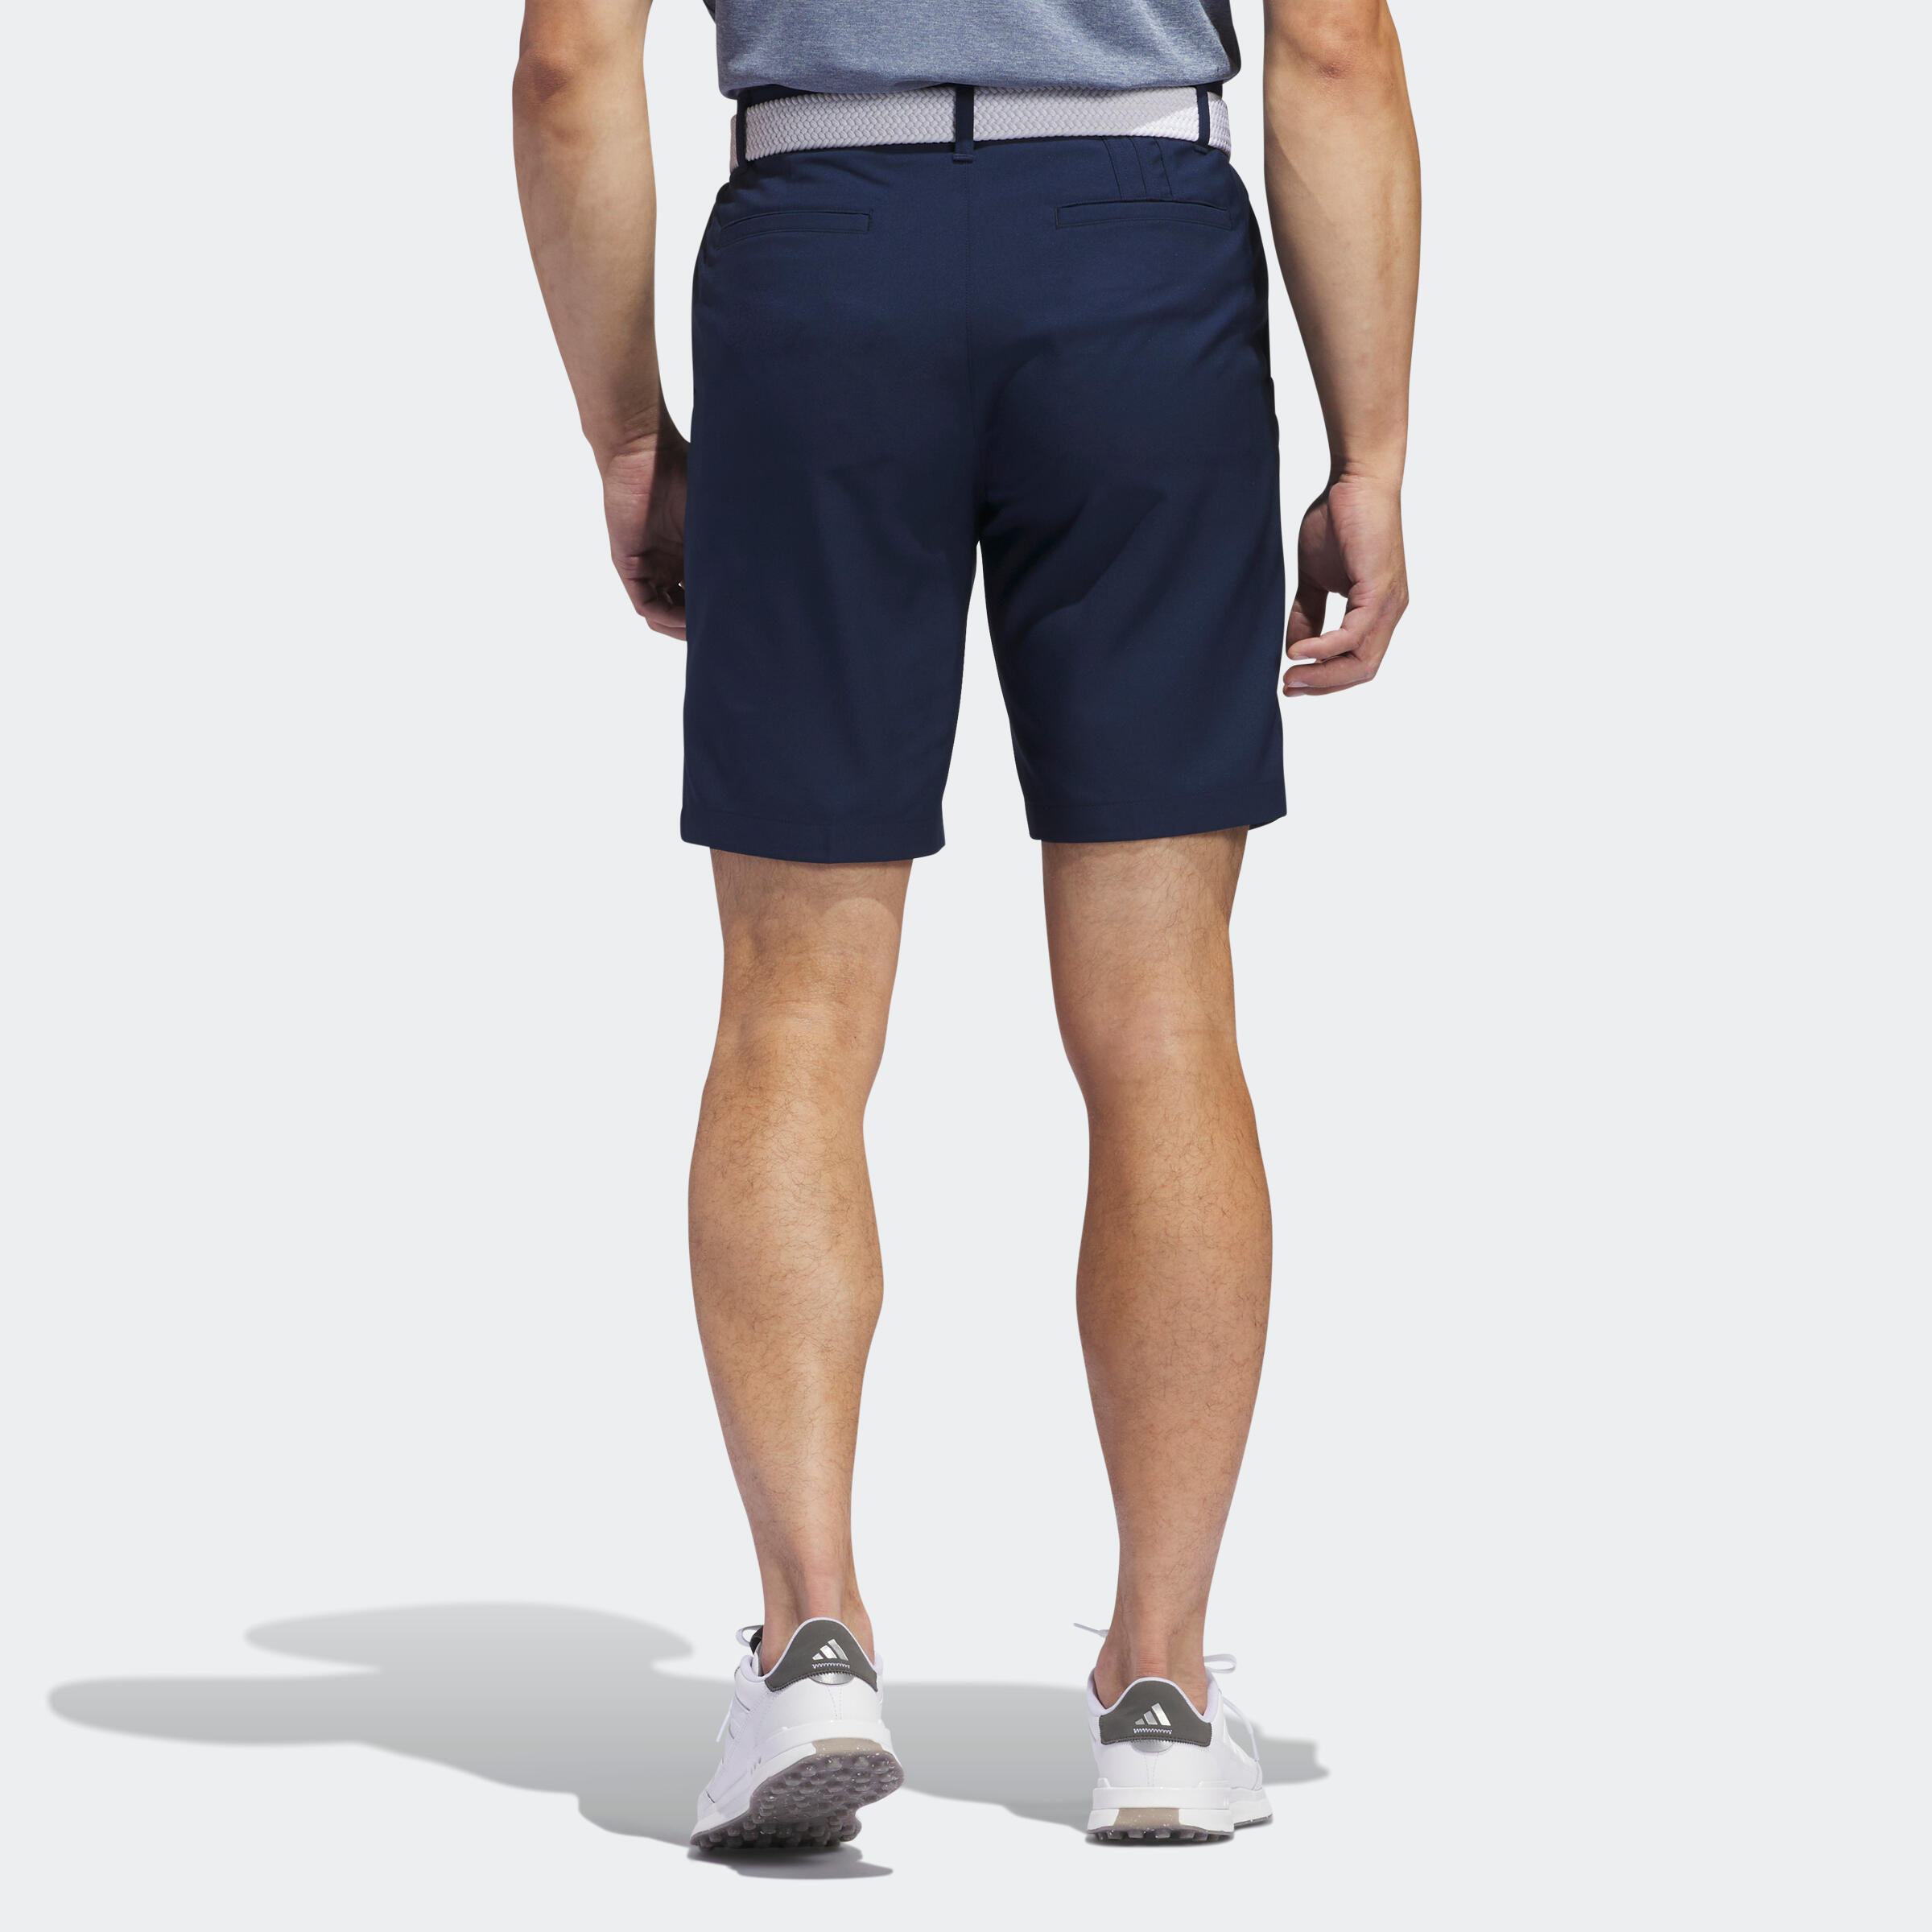 Men's golf Bermuda shorts - Adidas navy blue 2/4